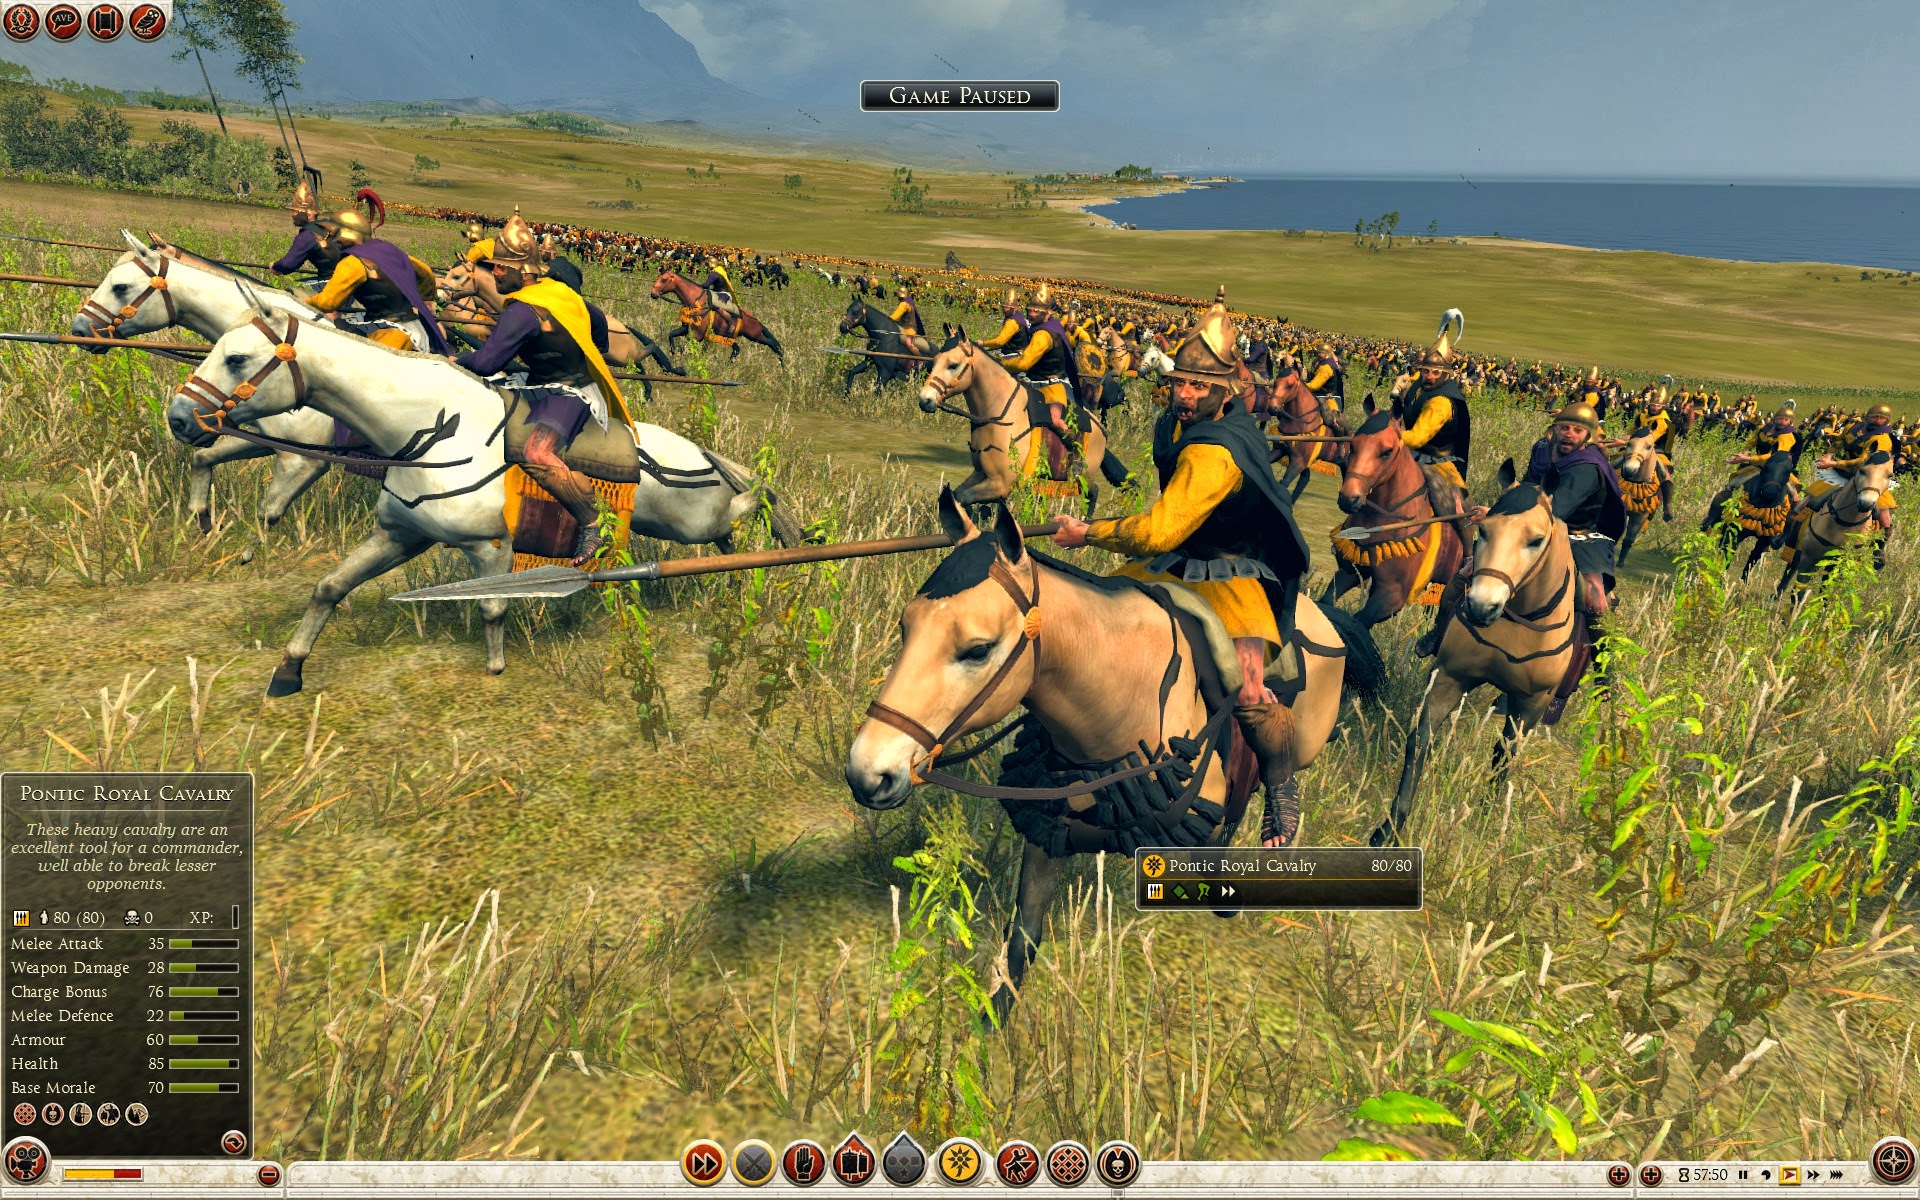 Pontic Royal Cavalry